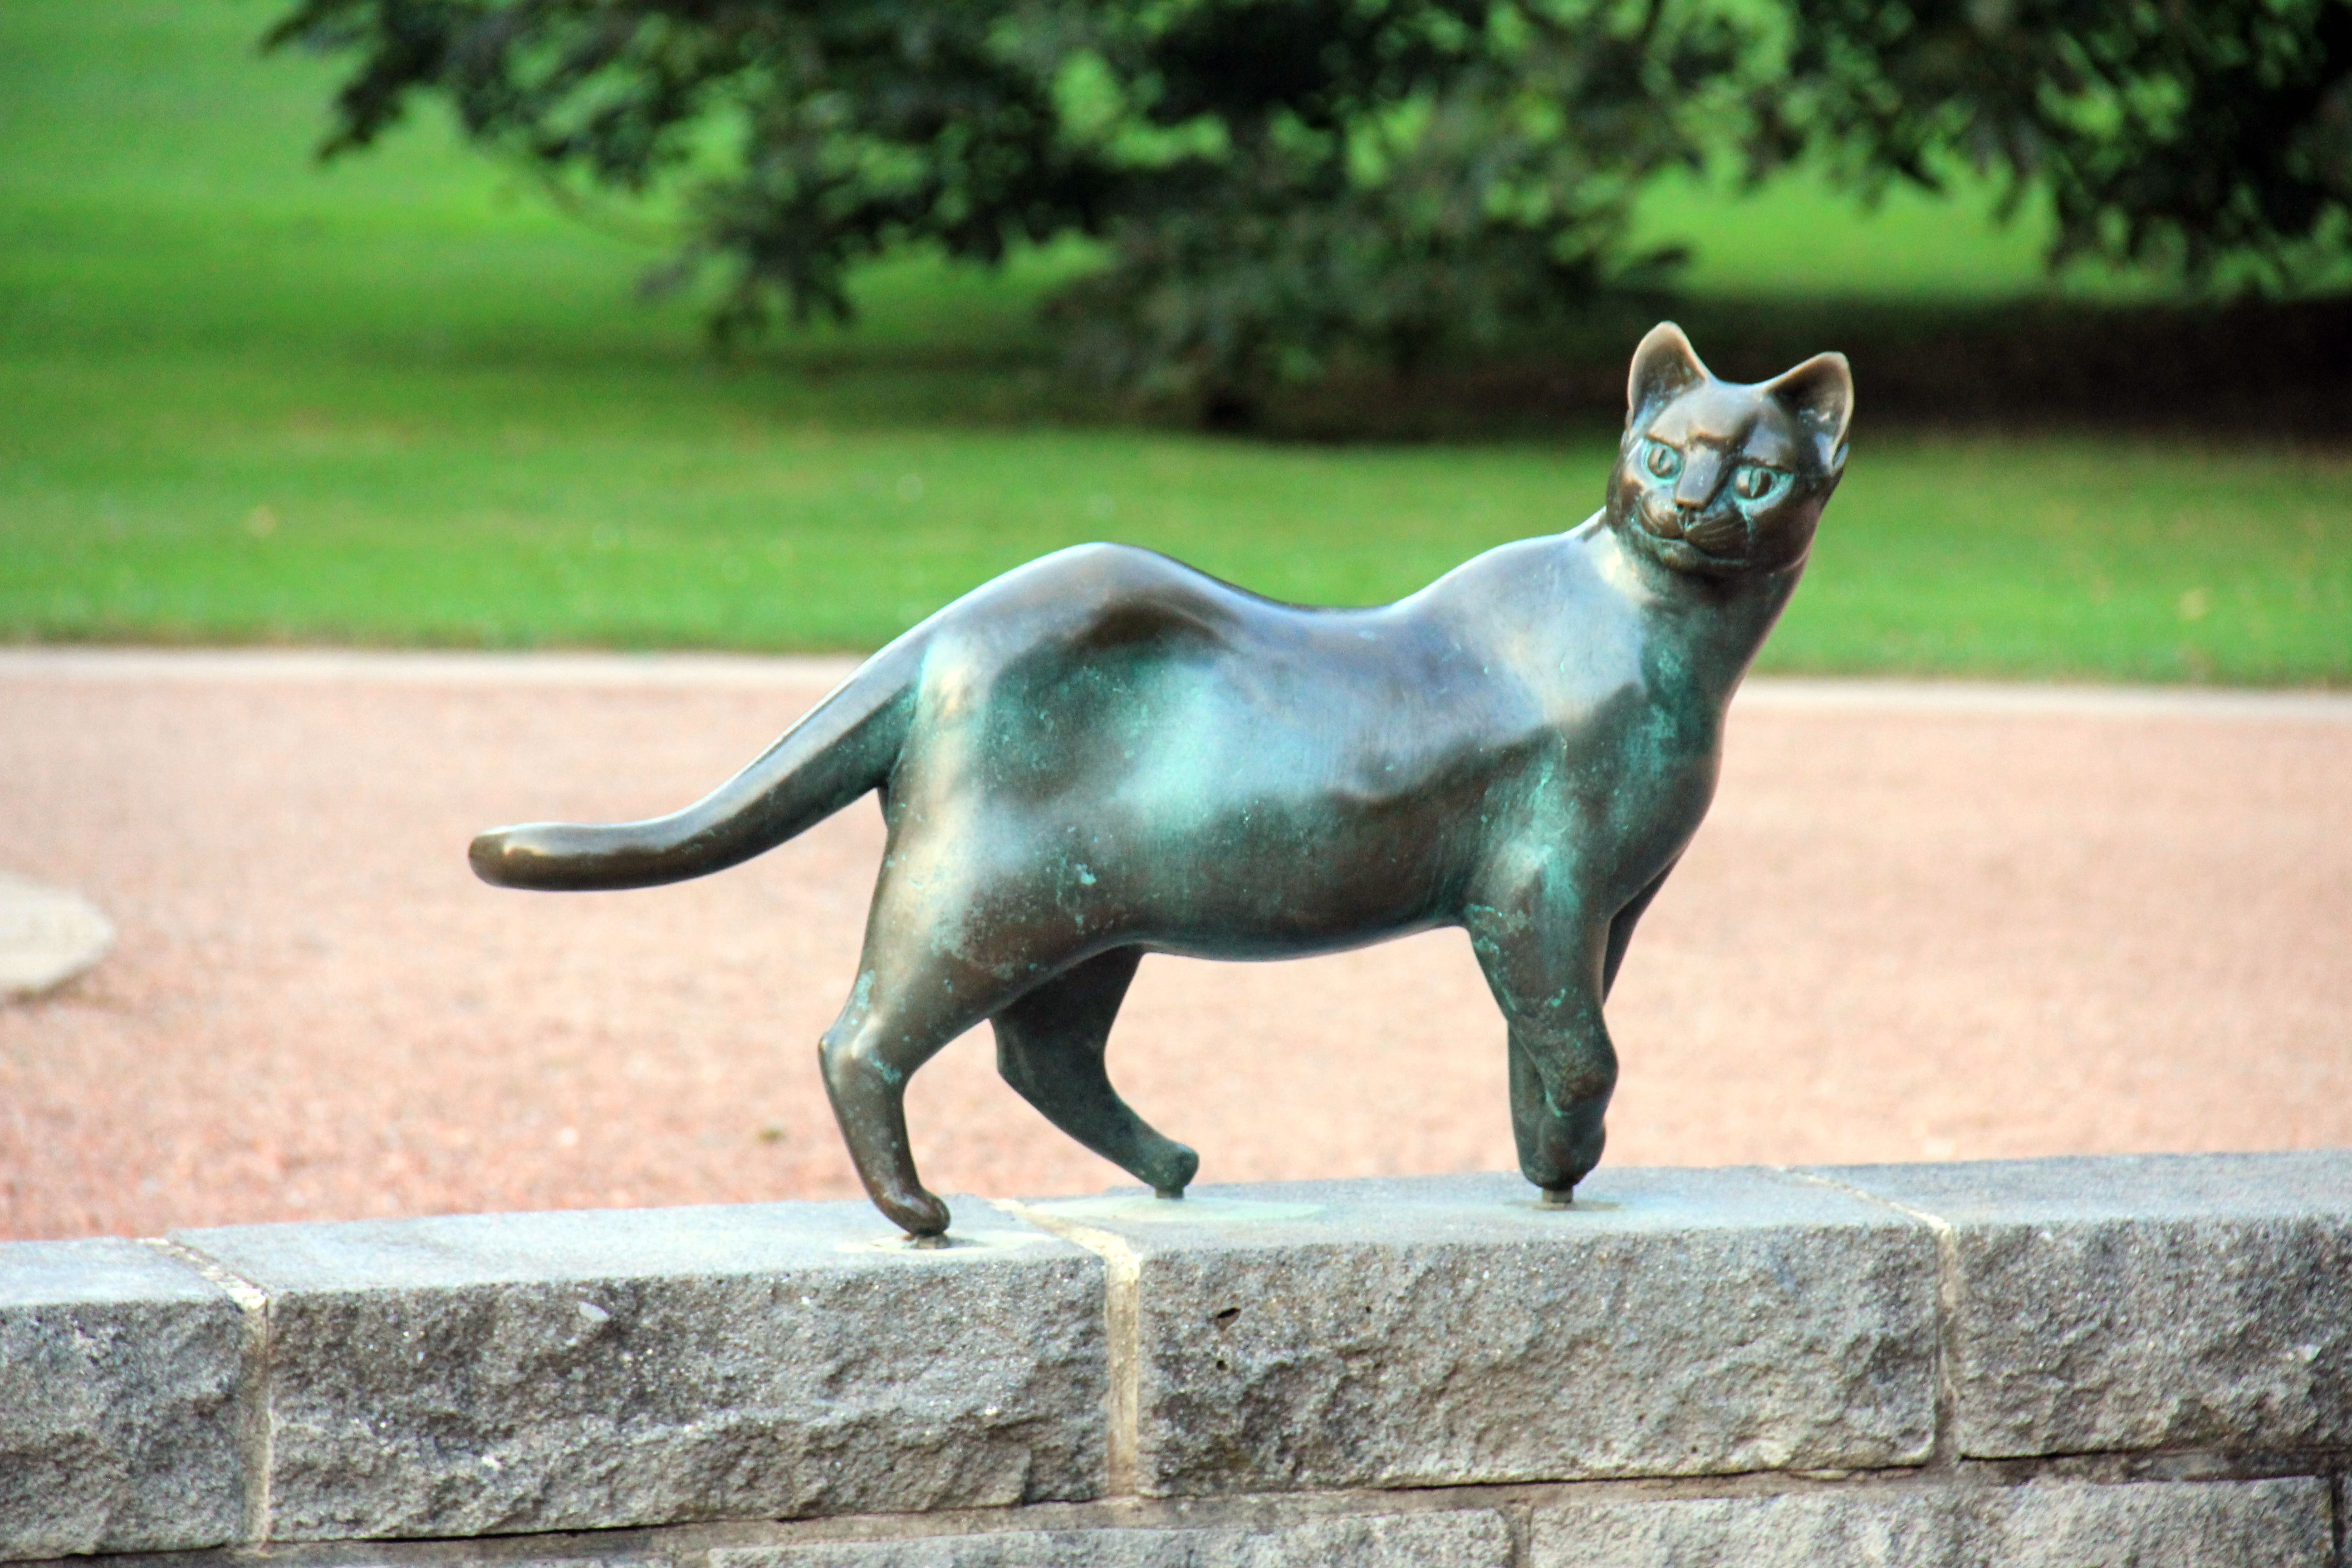 Animal, Park, Art, Sculpture, Cat, one animal, day